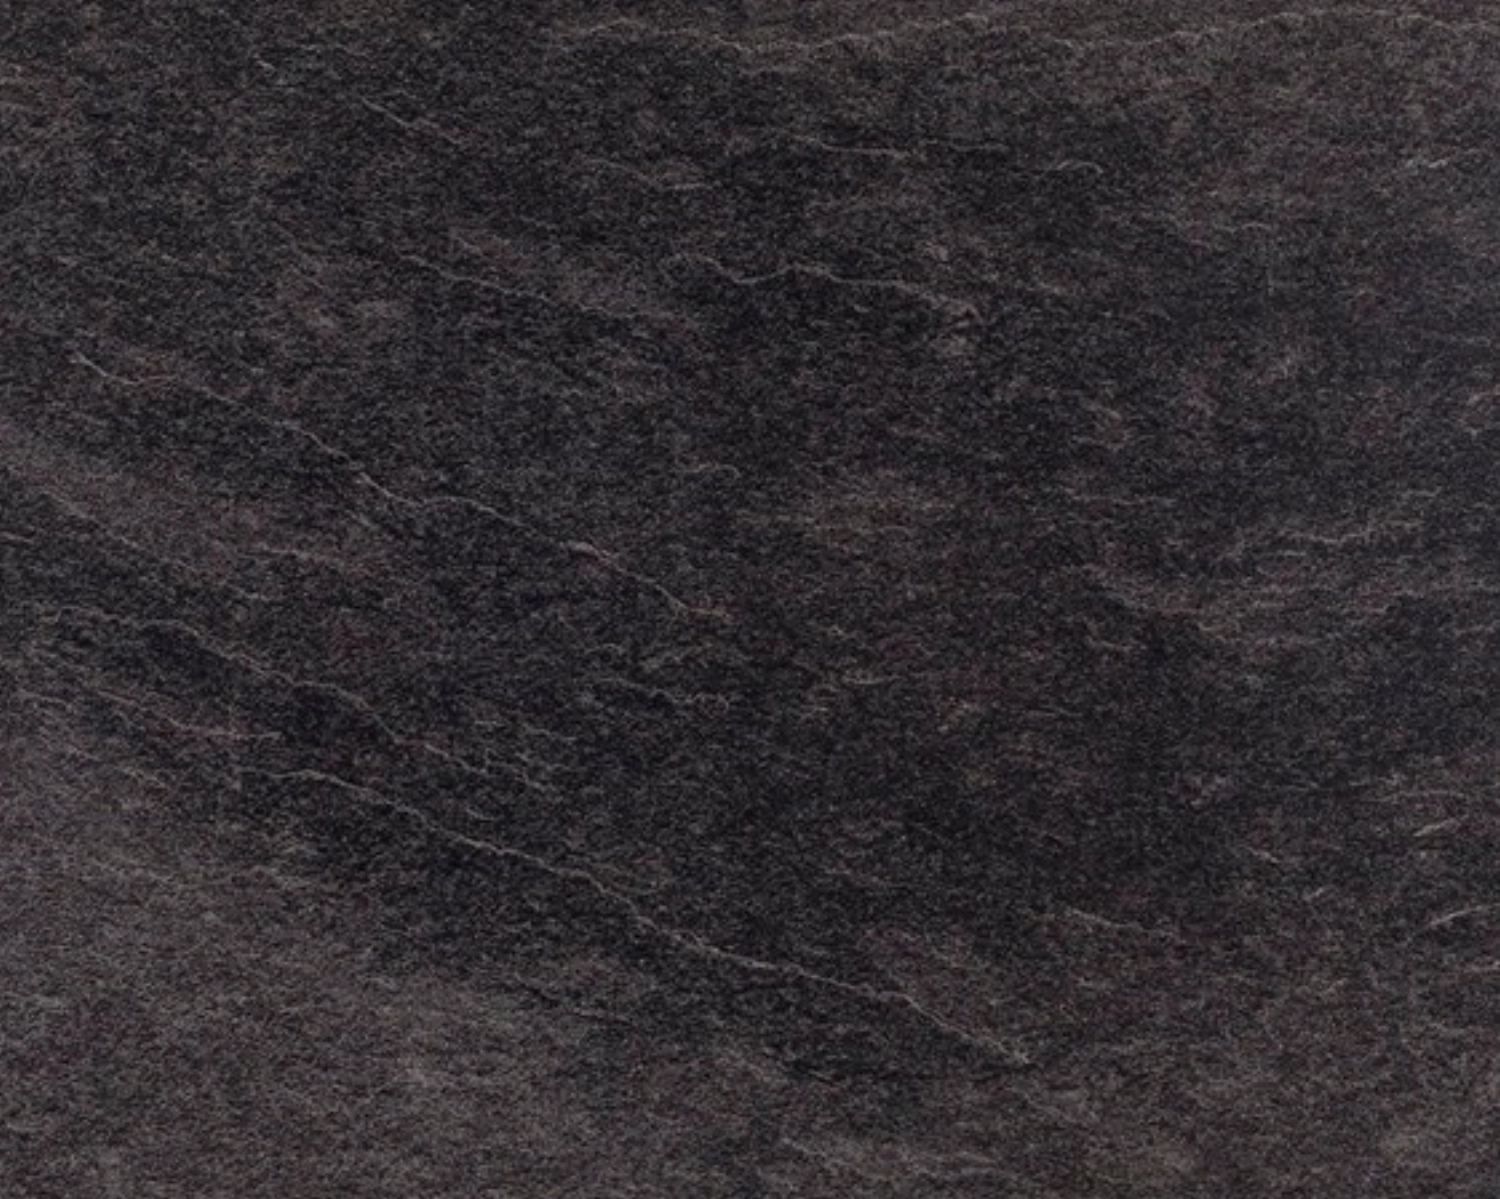 Tablett Euronorm Dark Marble 53x37cm